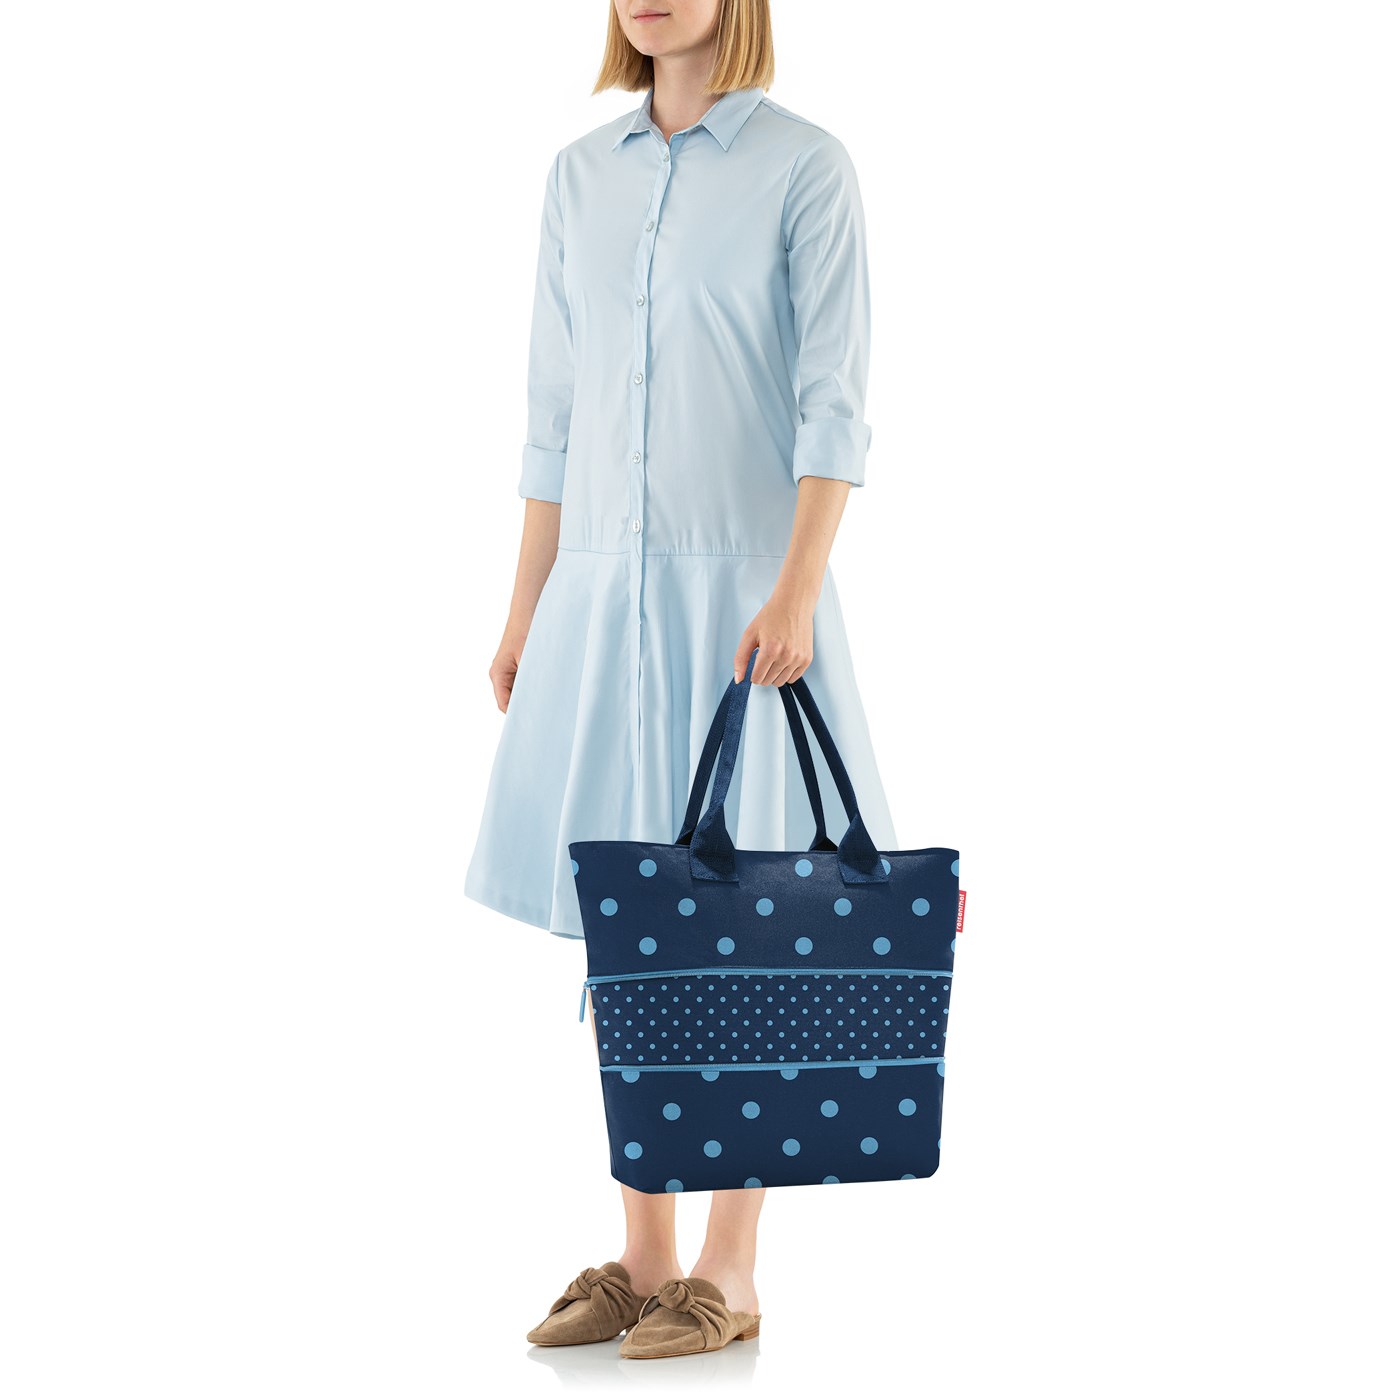 Chytrá taška přes rameno Shopper e1 mixed dots blue_2